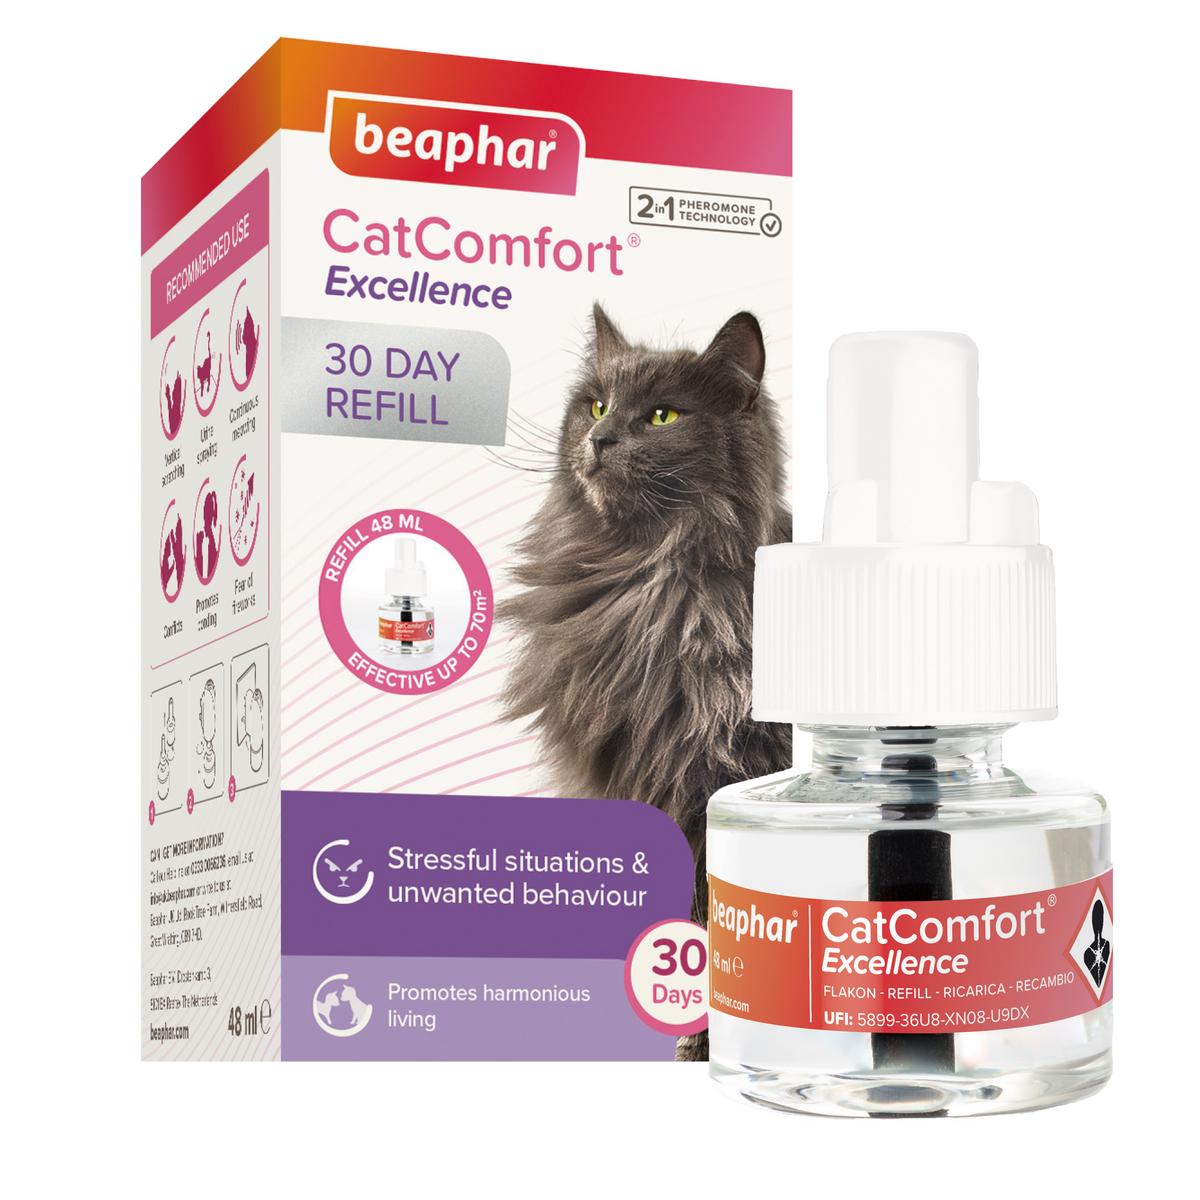 Beaphar CatComfort Cat Calming Diffuser 30 day refill